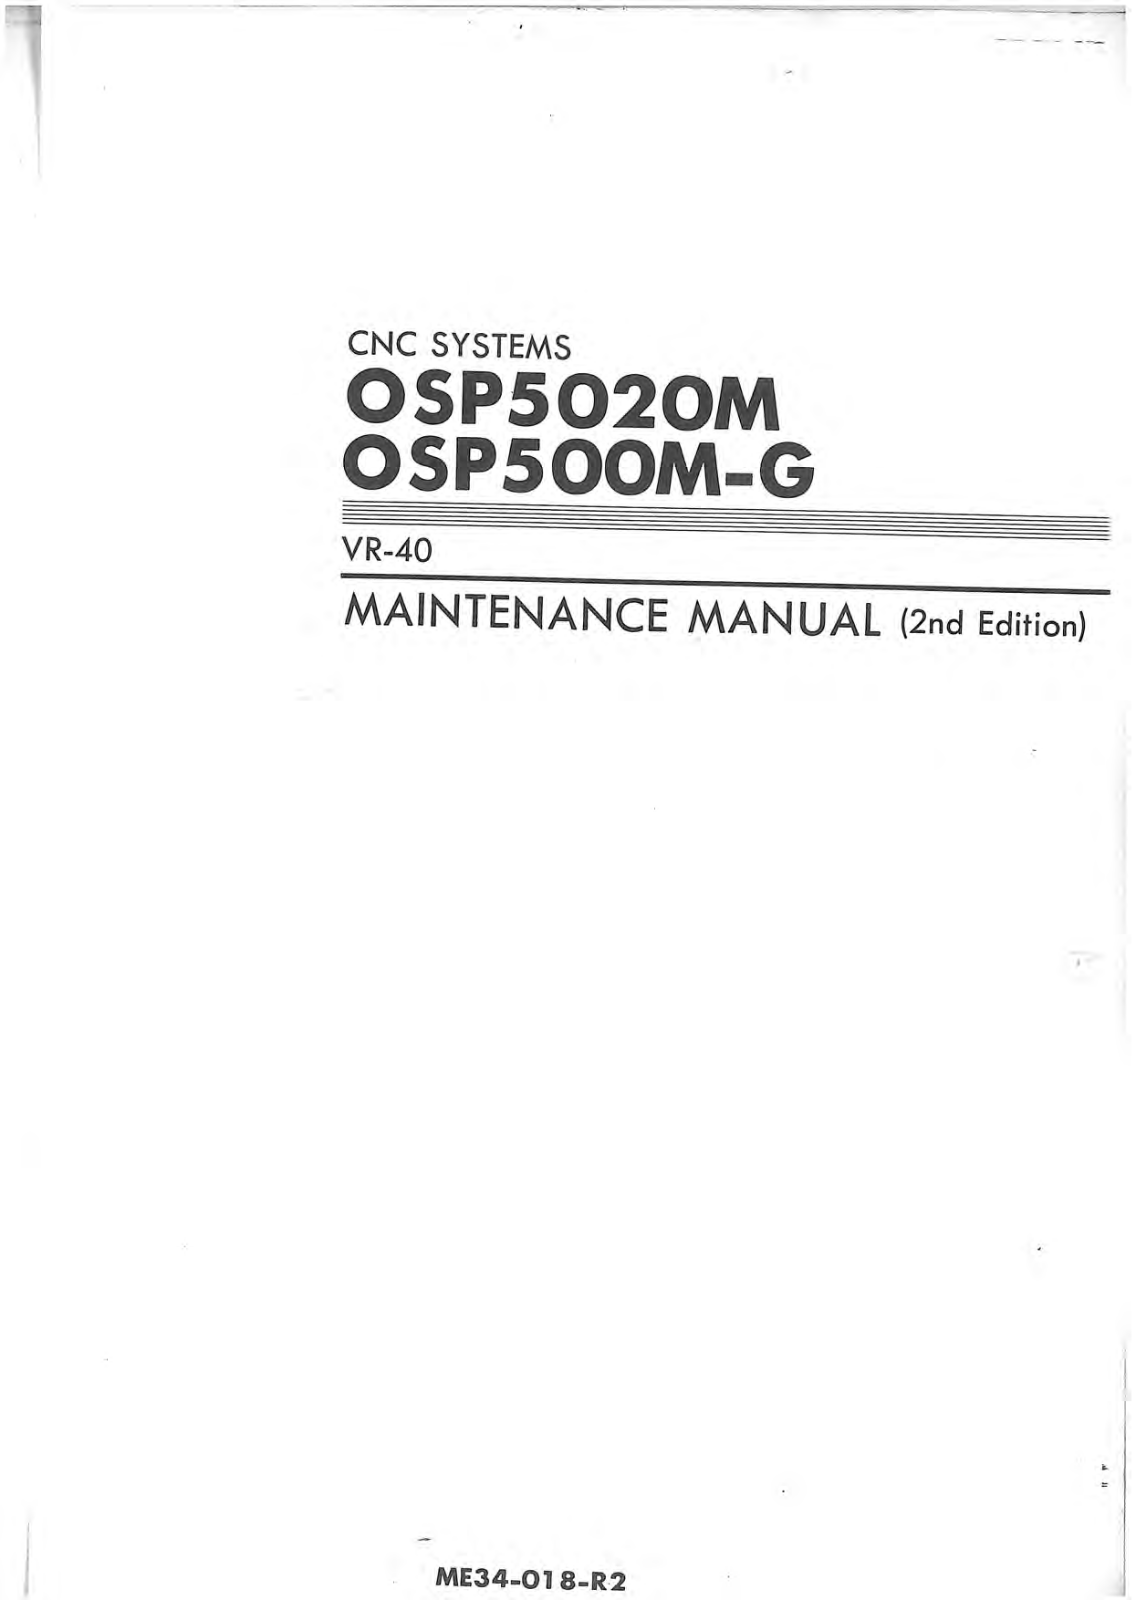 okuma OSP5020M, OSP500M-G Maintenance Manual